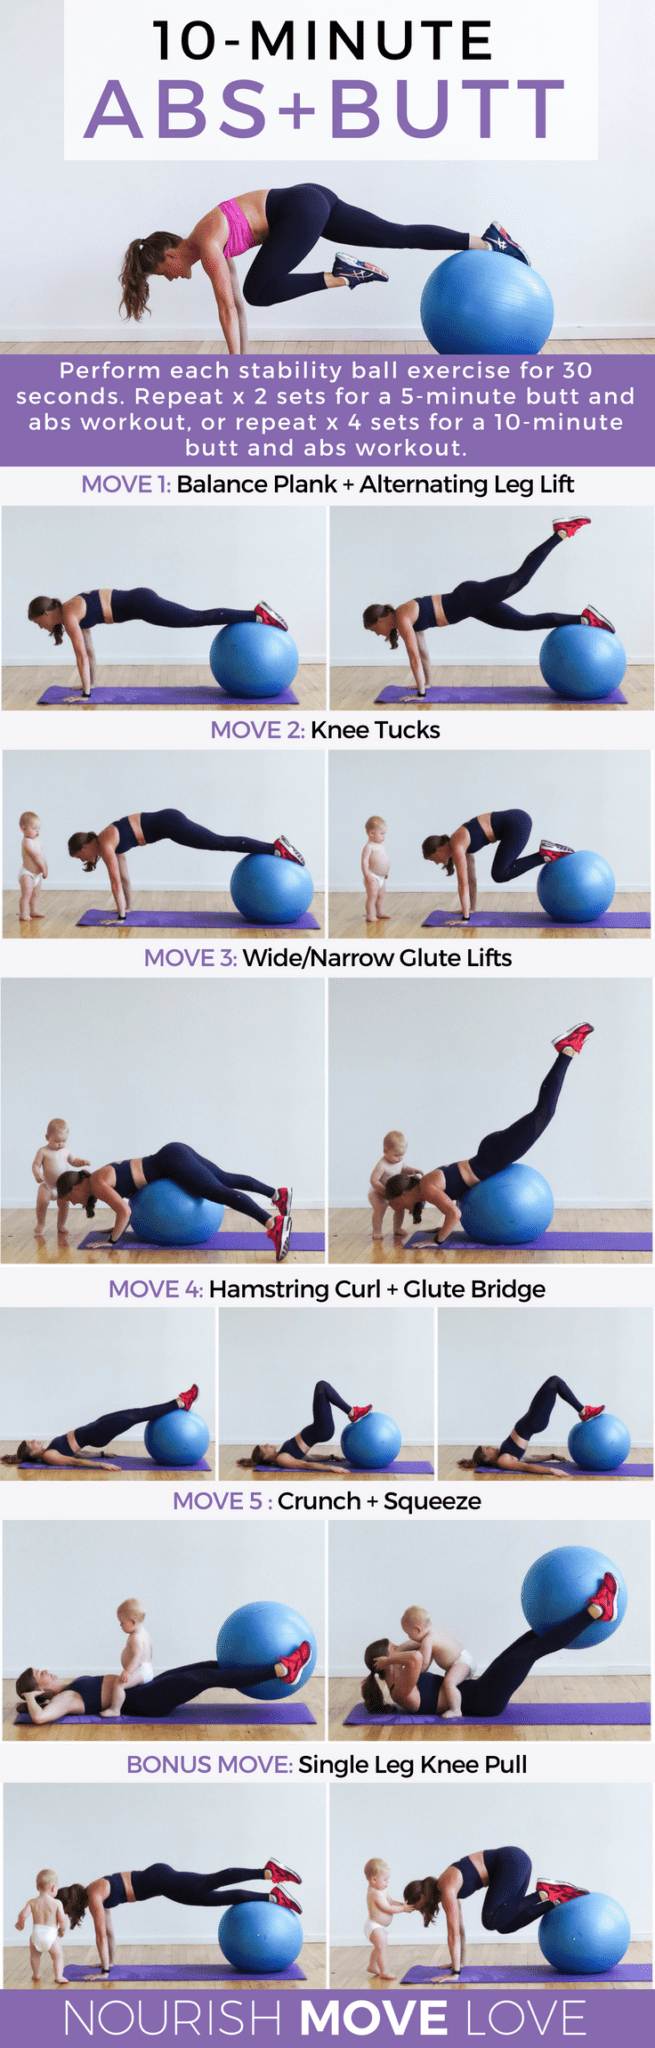 exercise ball exercises